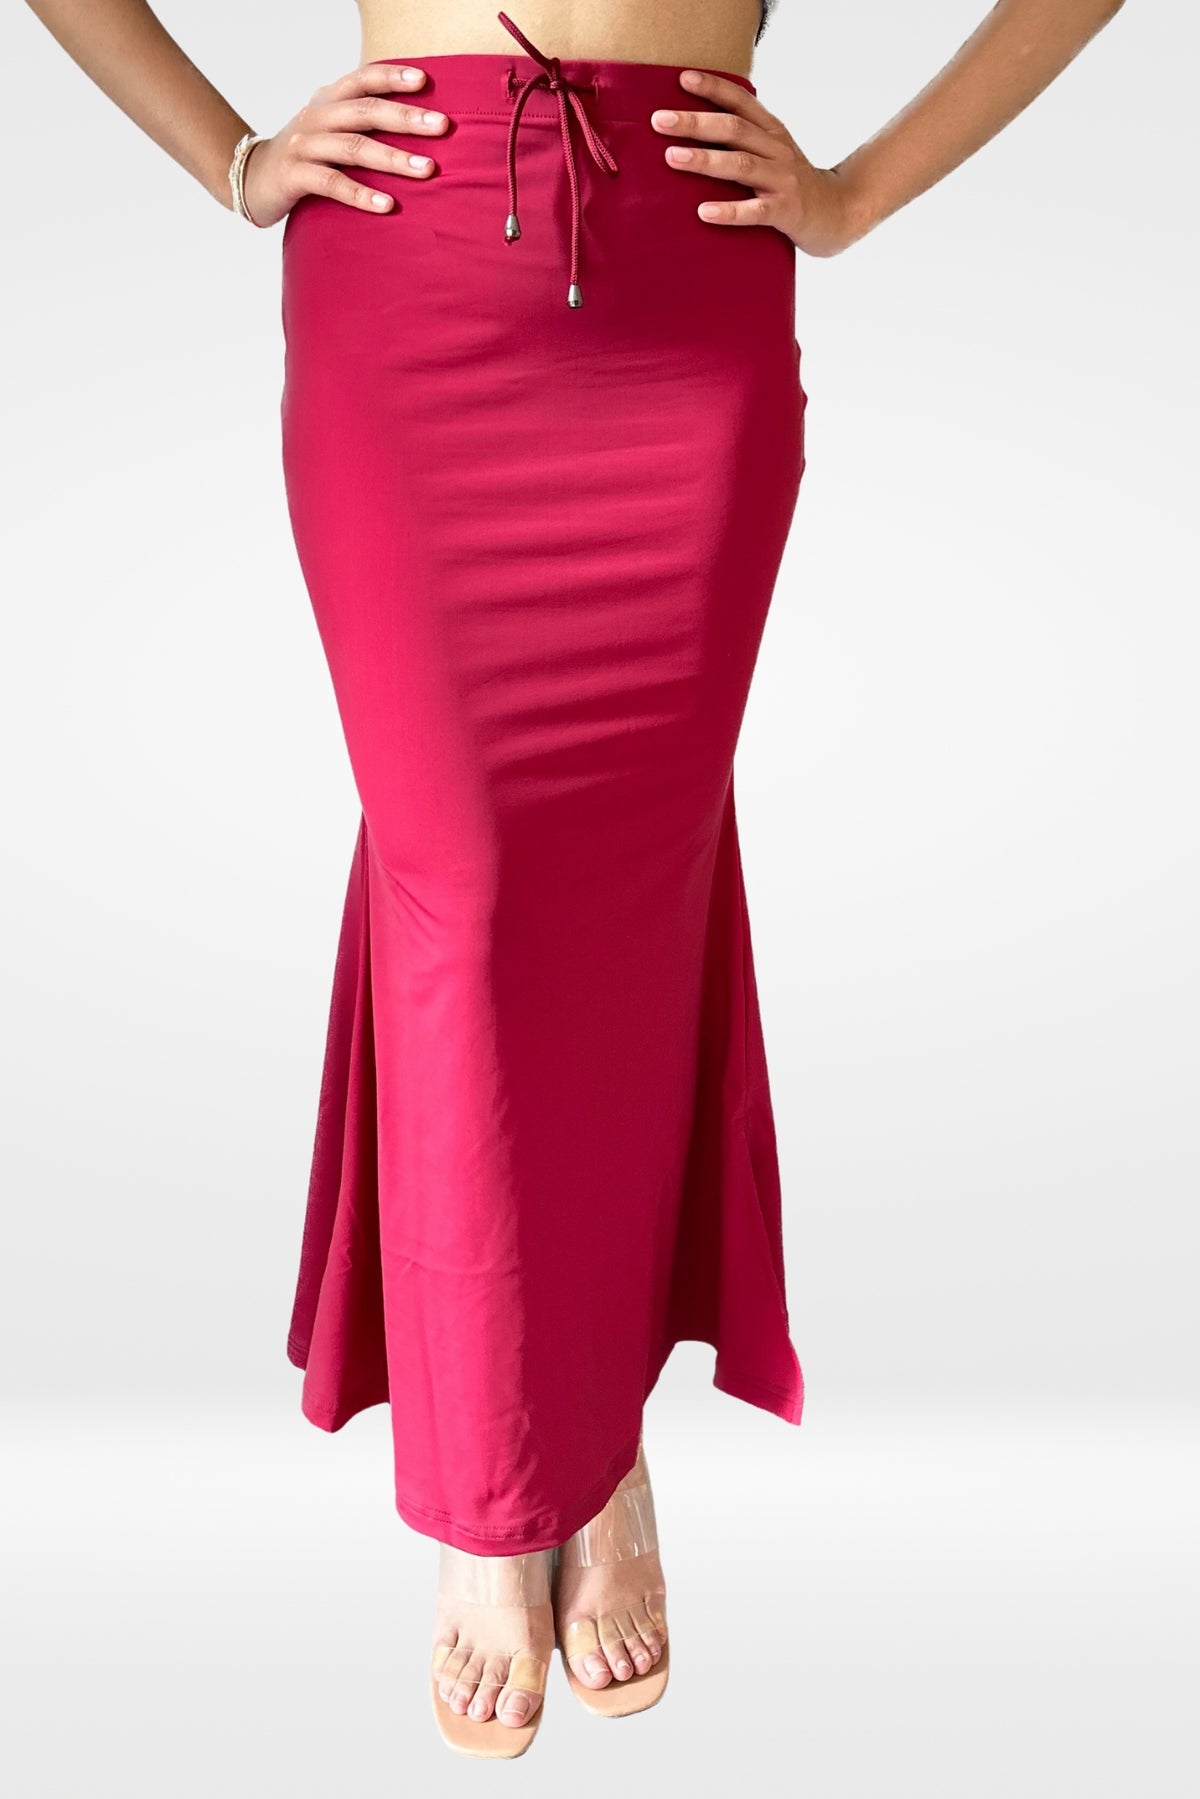 Red Saree Shape wear, Saree Petticoat